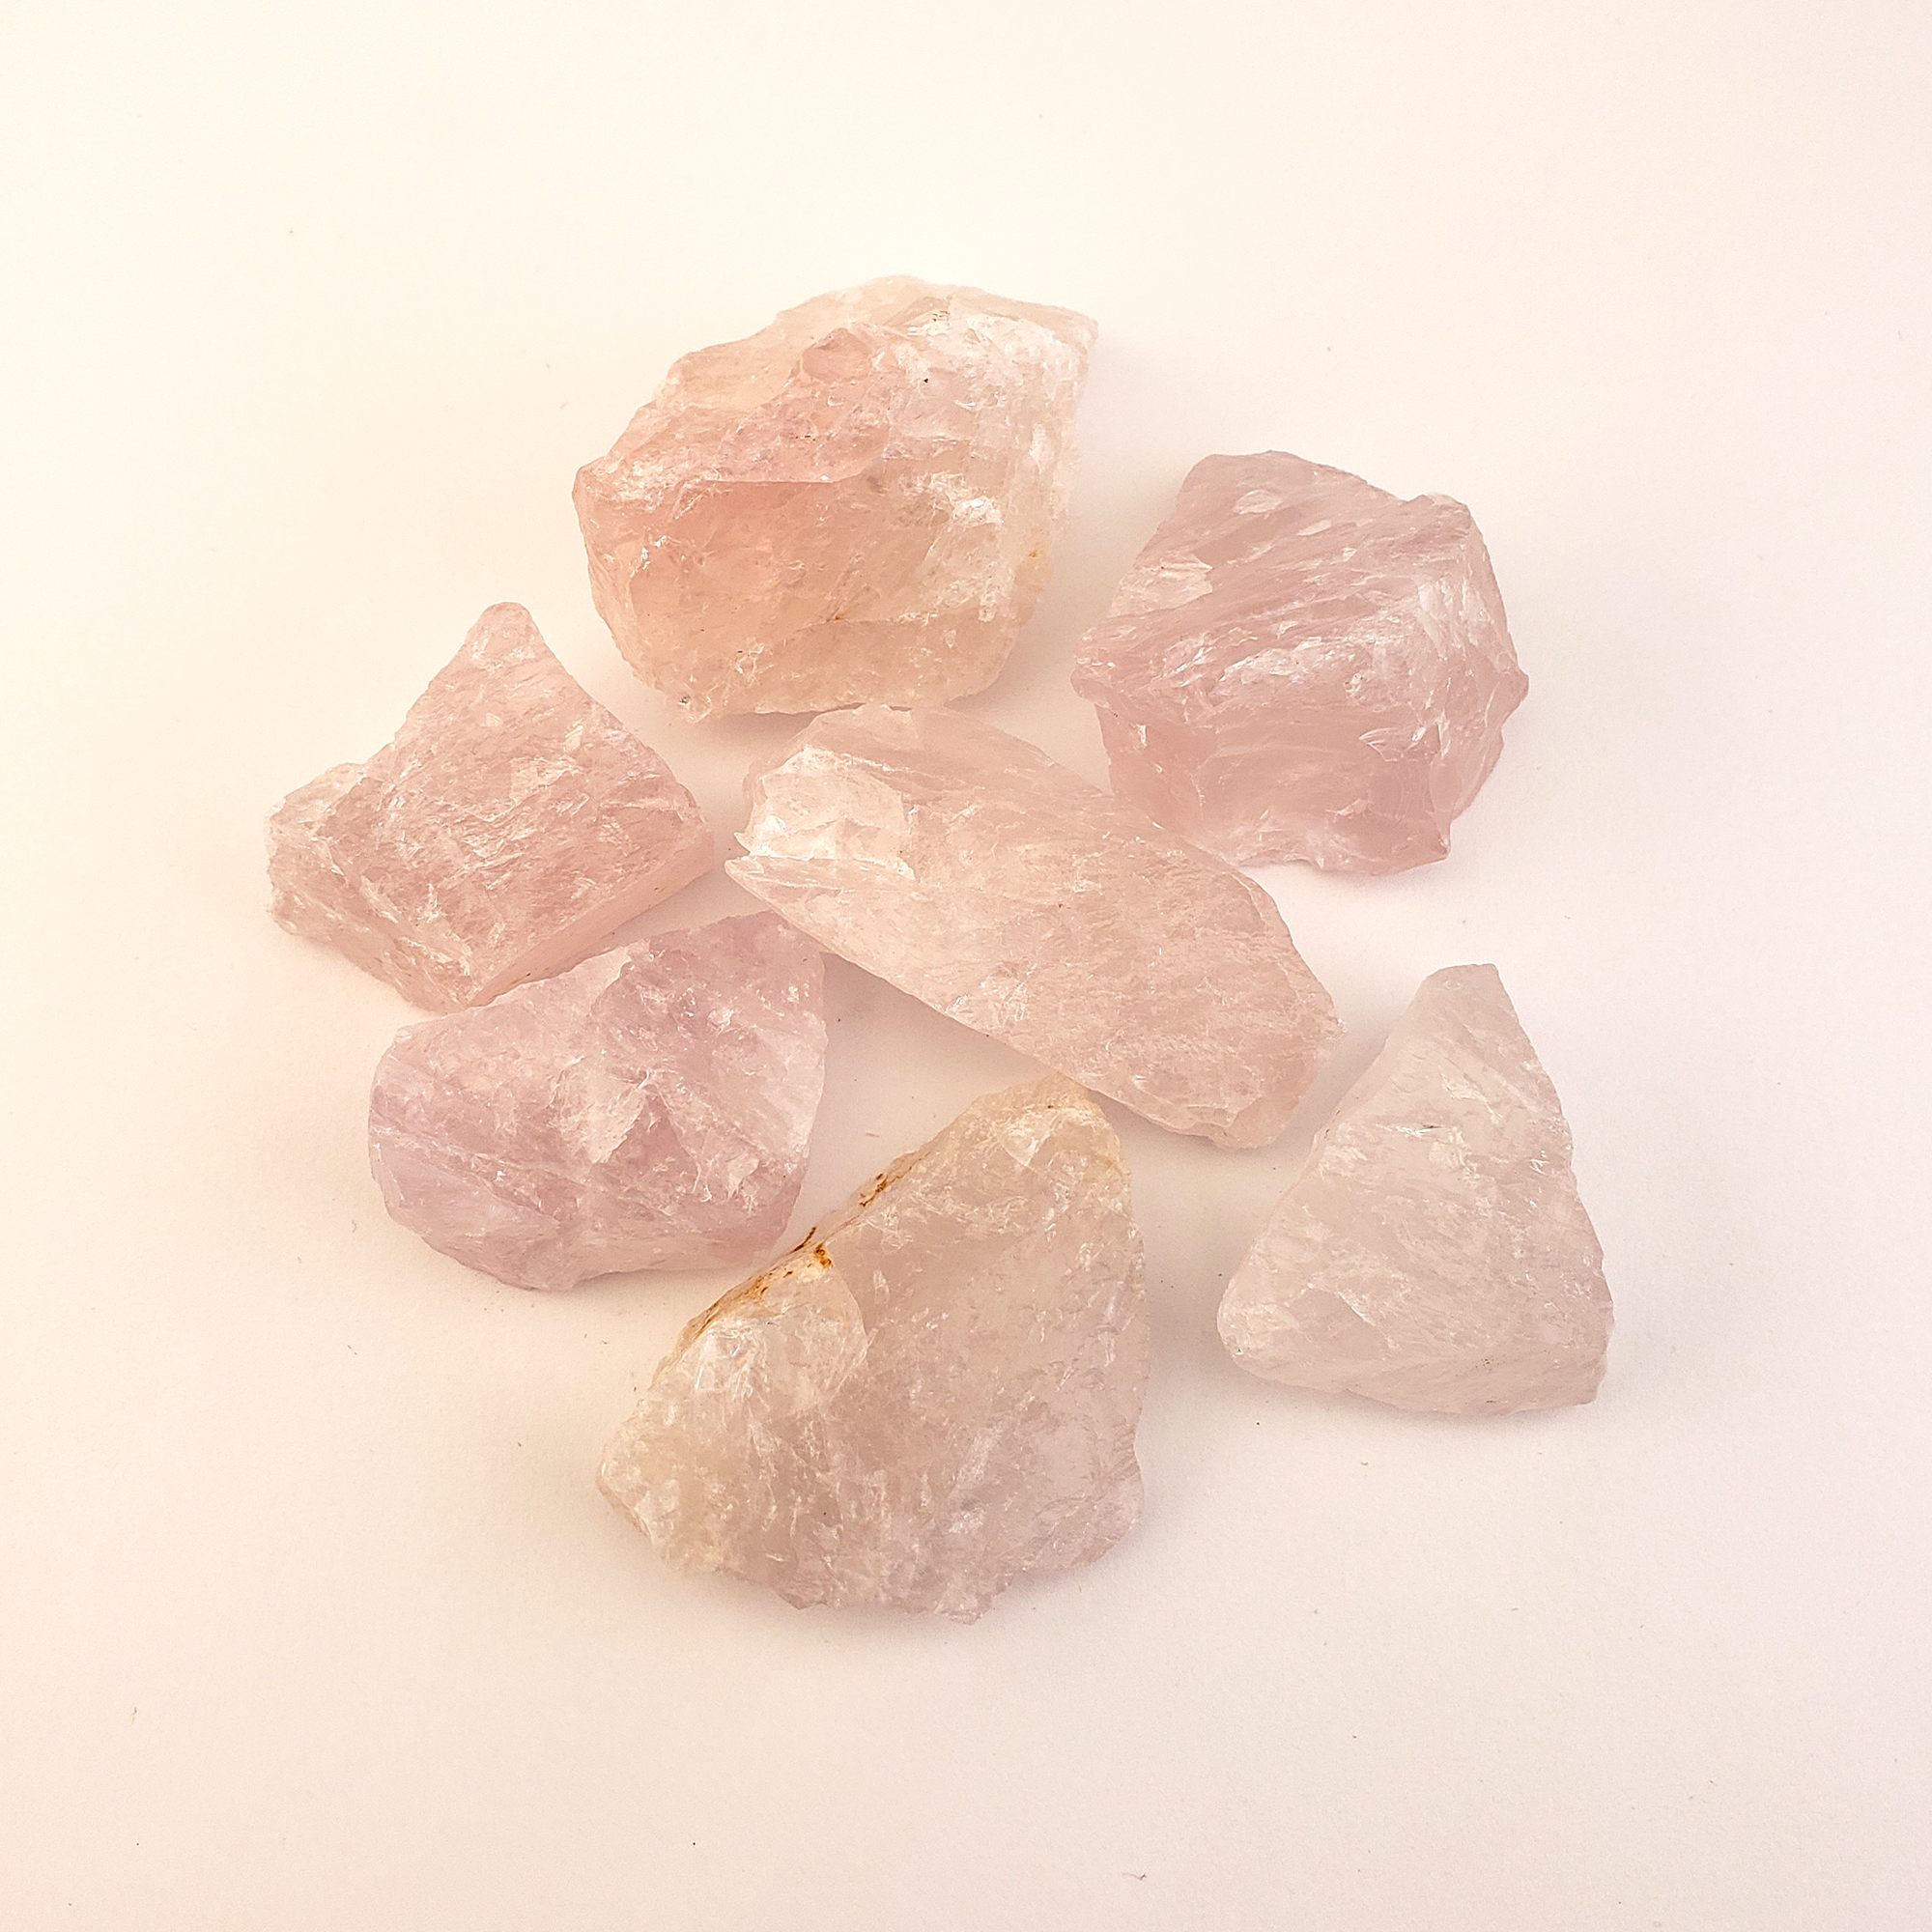 Rose Quartz Raw Crystal Rough Gemstone - Small One Stone - White Background 3